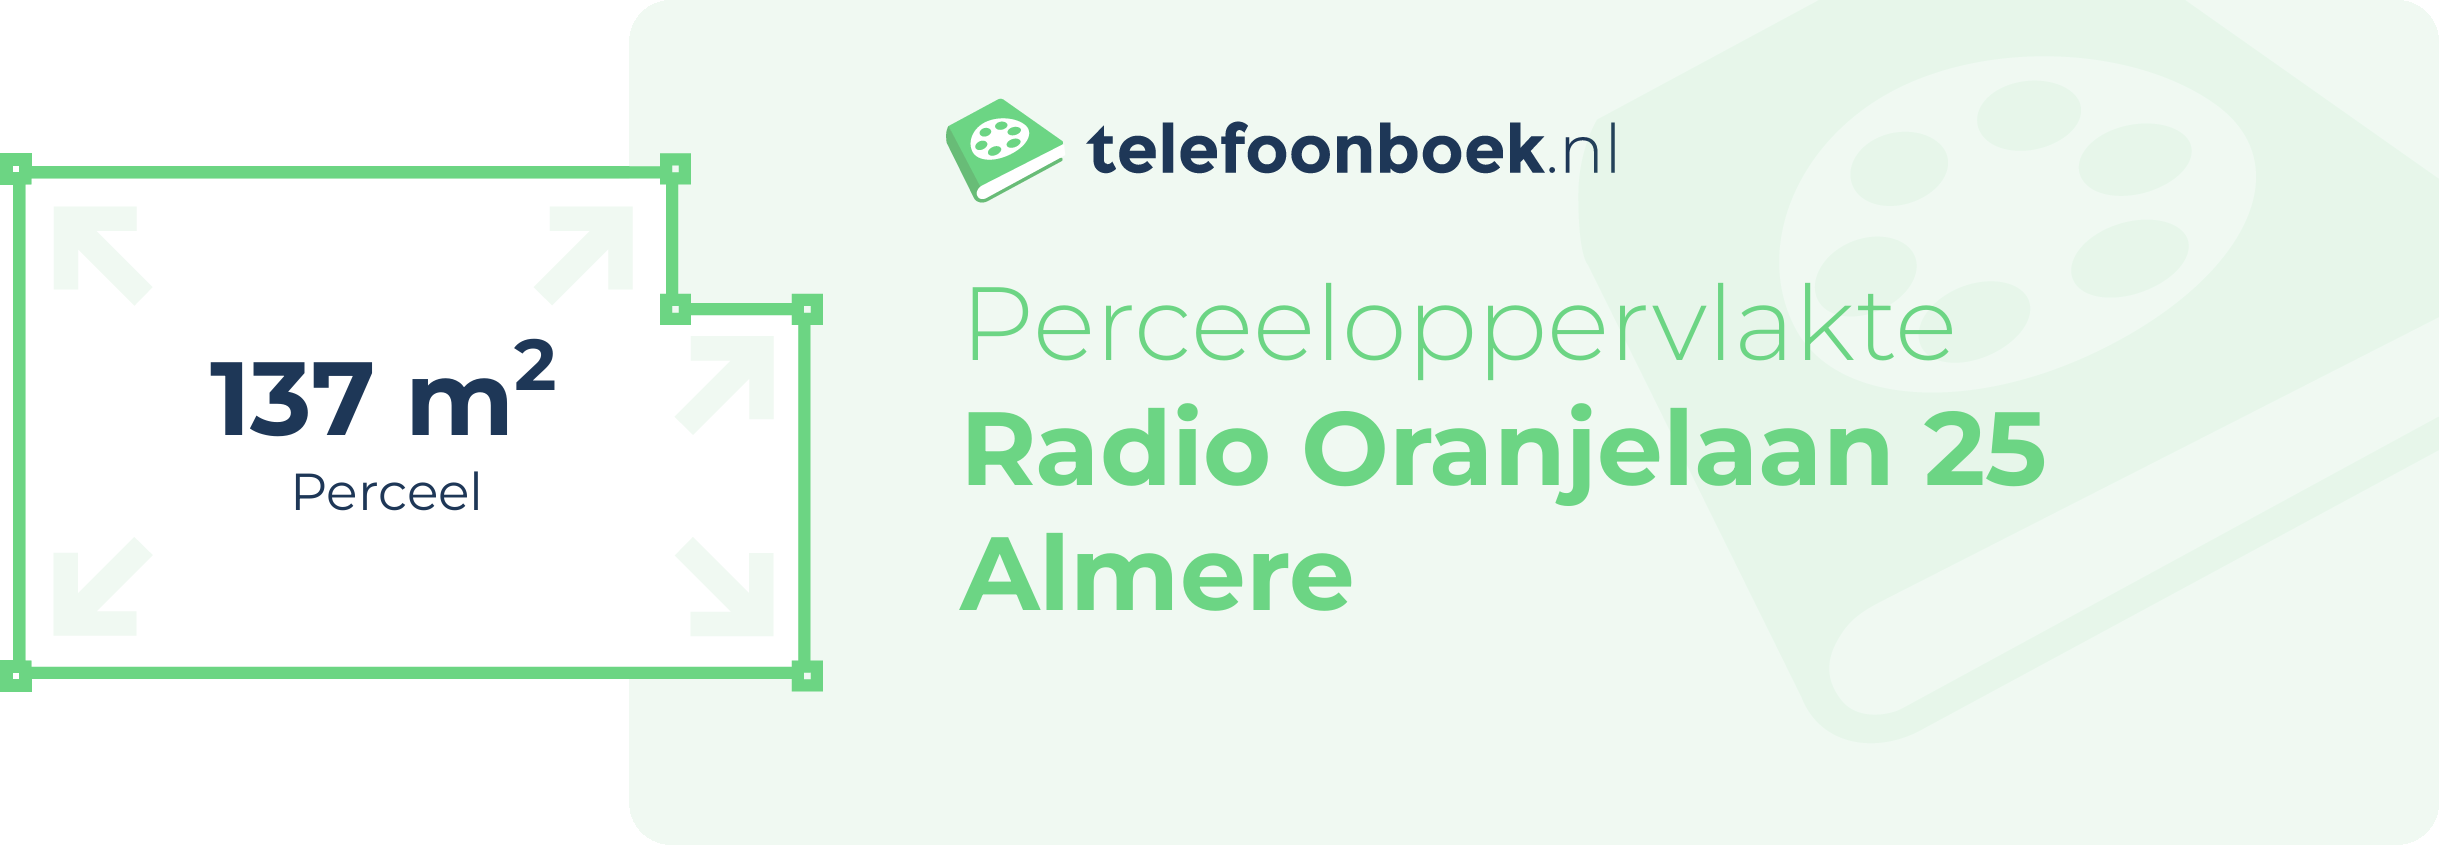 Perceeloppervlakte Radio Oranjelaan 25 Almere